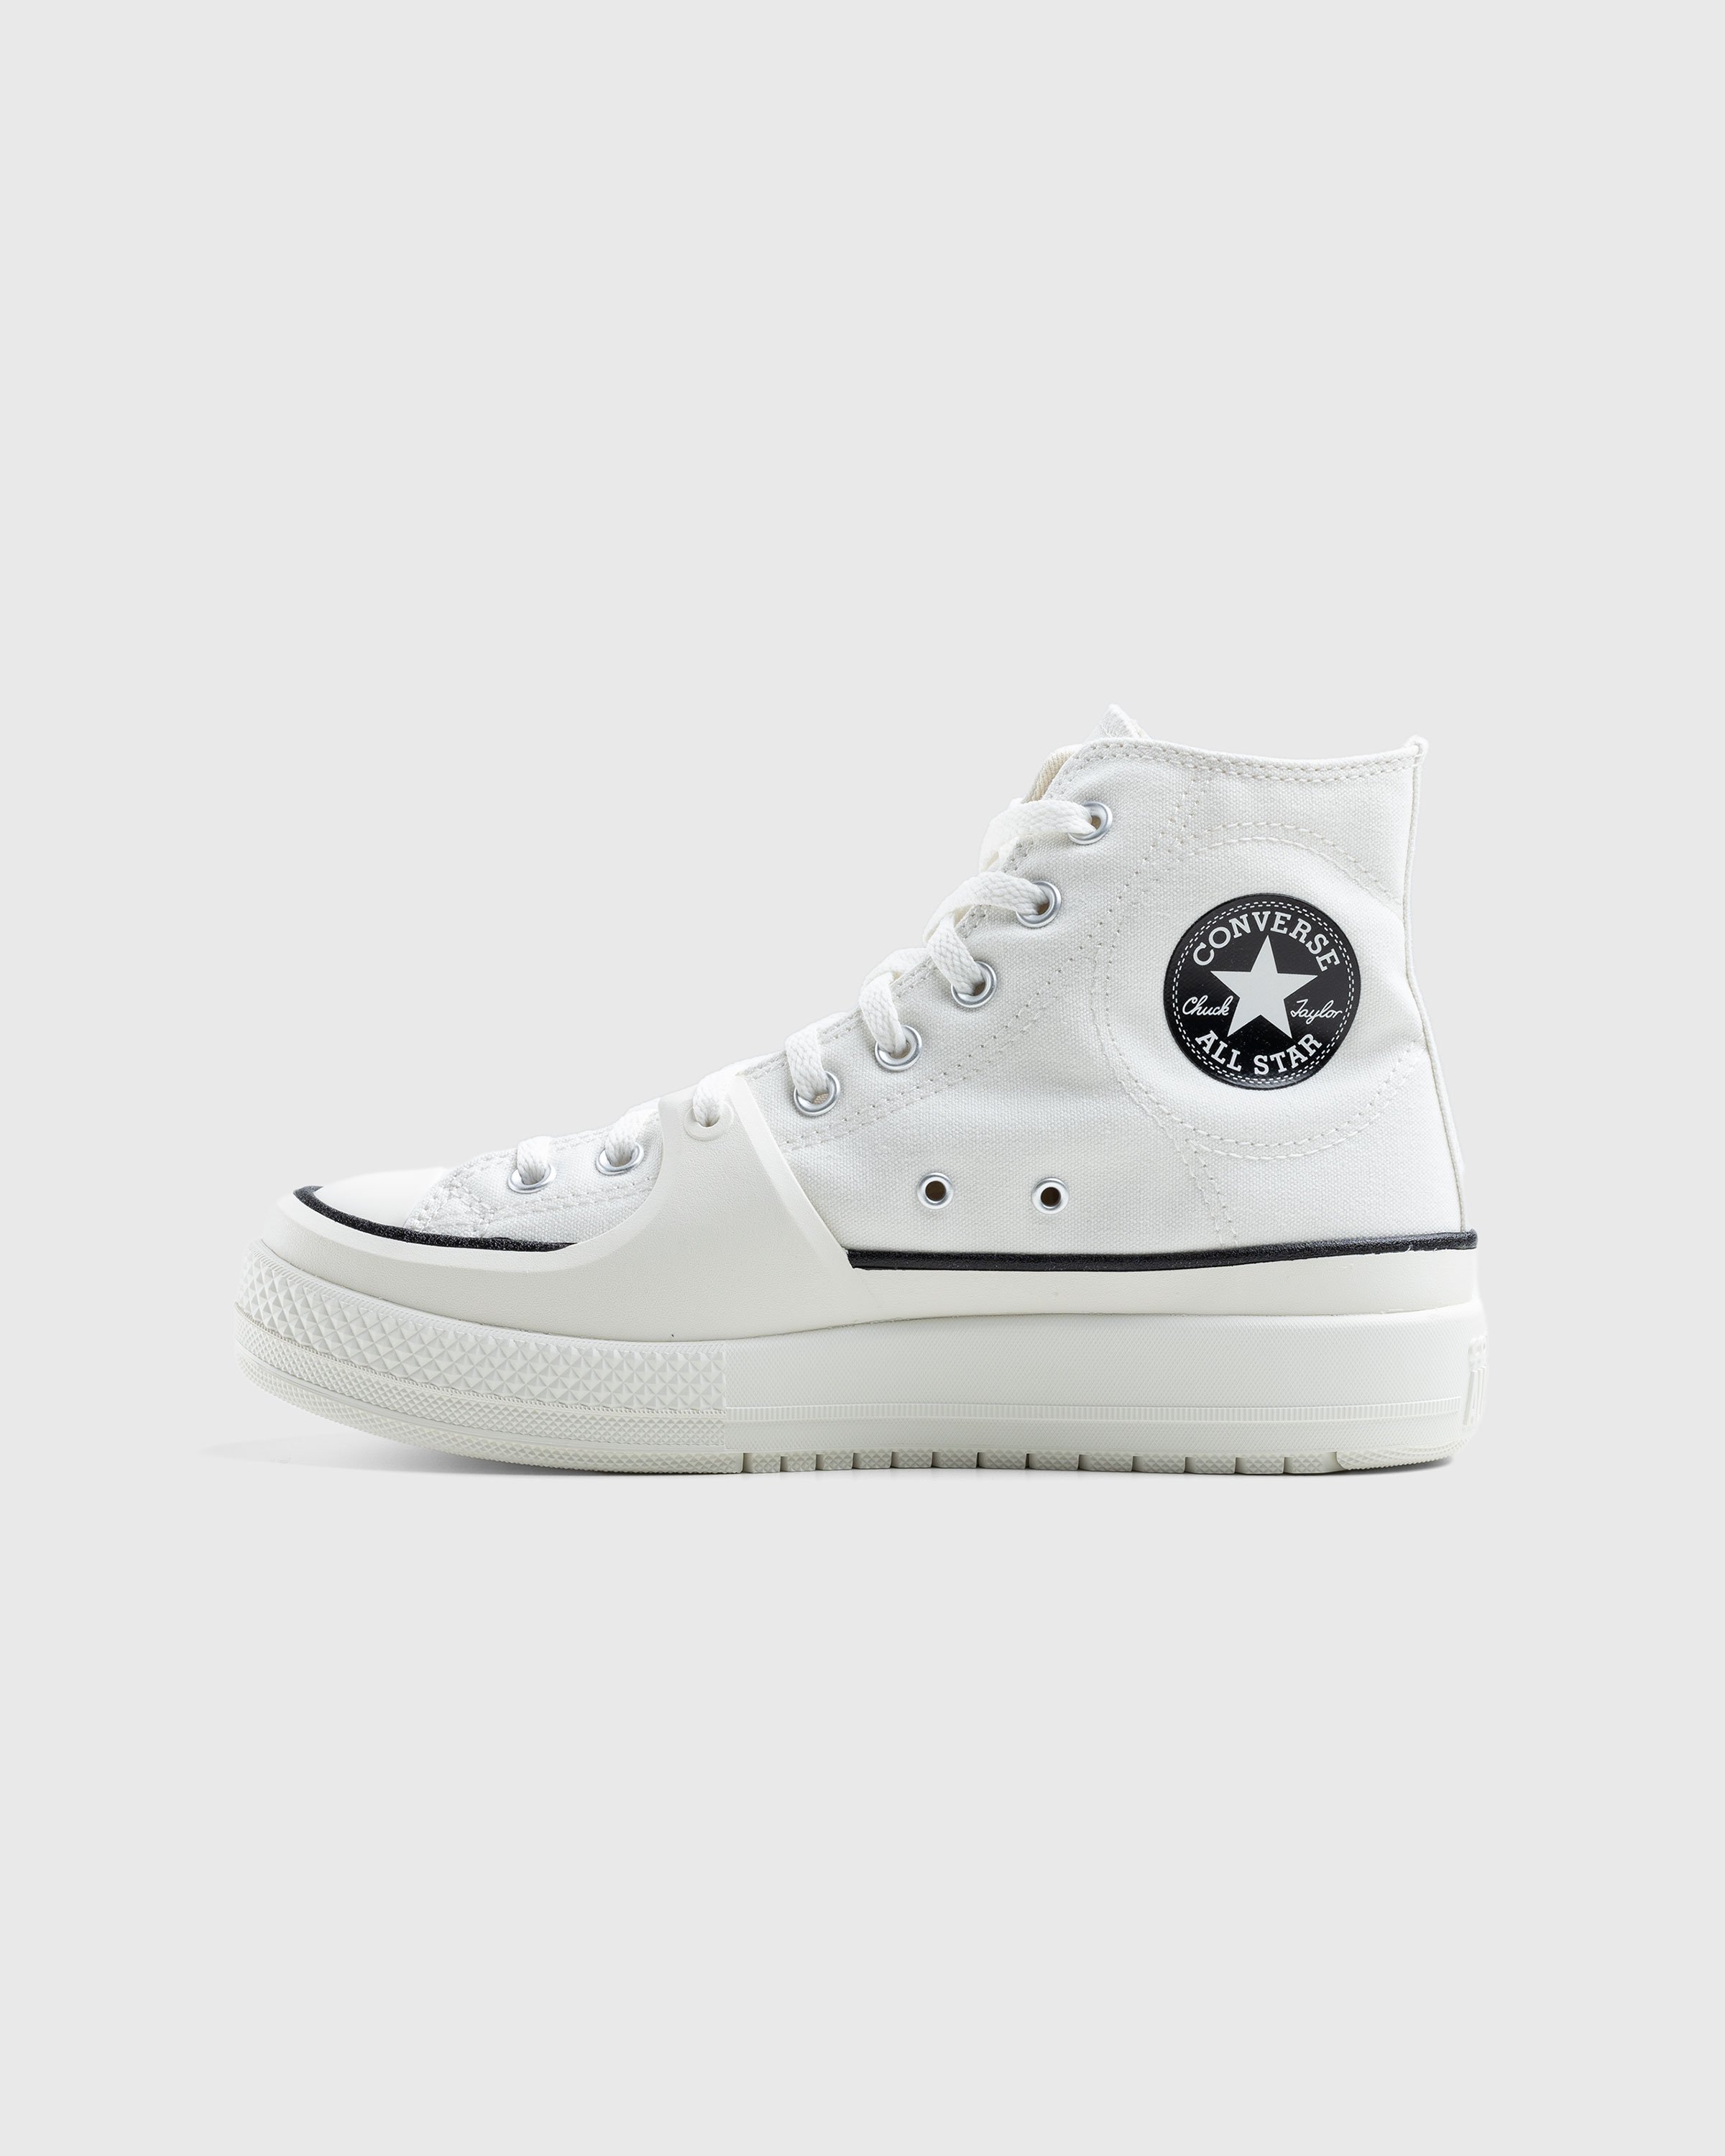 Converse - Chuck Taylor All Star Construct Hi Vintage White/Black/Egret - Footwear - Beige - Image 2